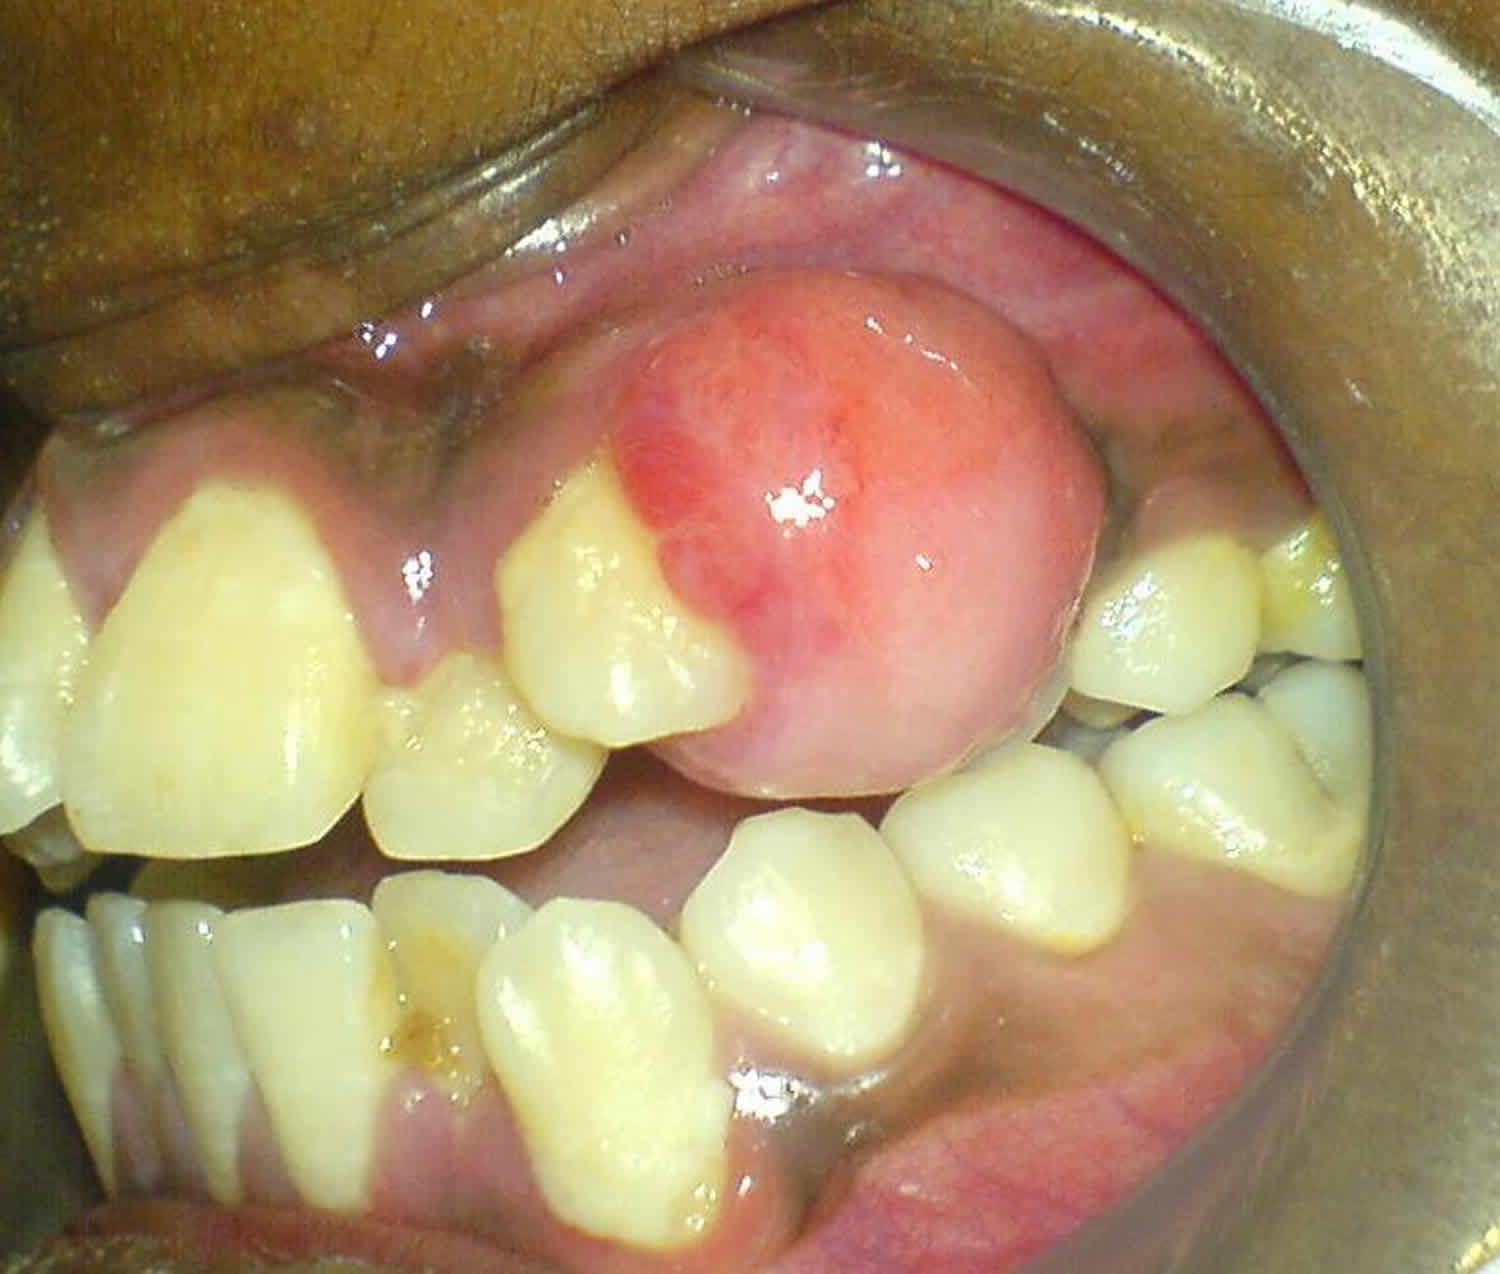 Pyogenic granuloma mouth